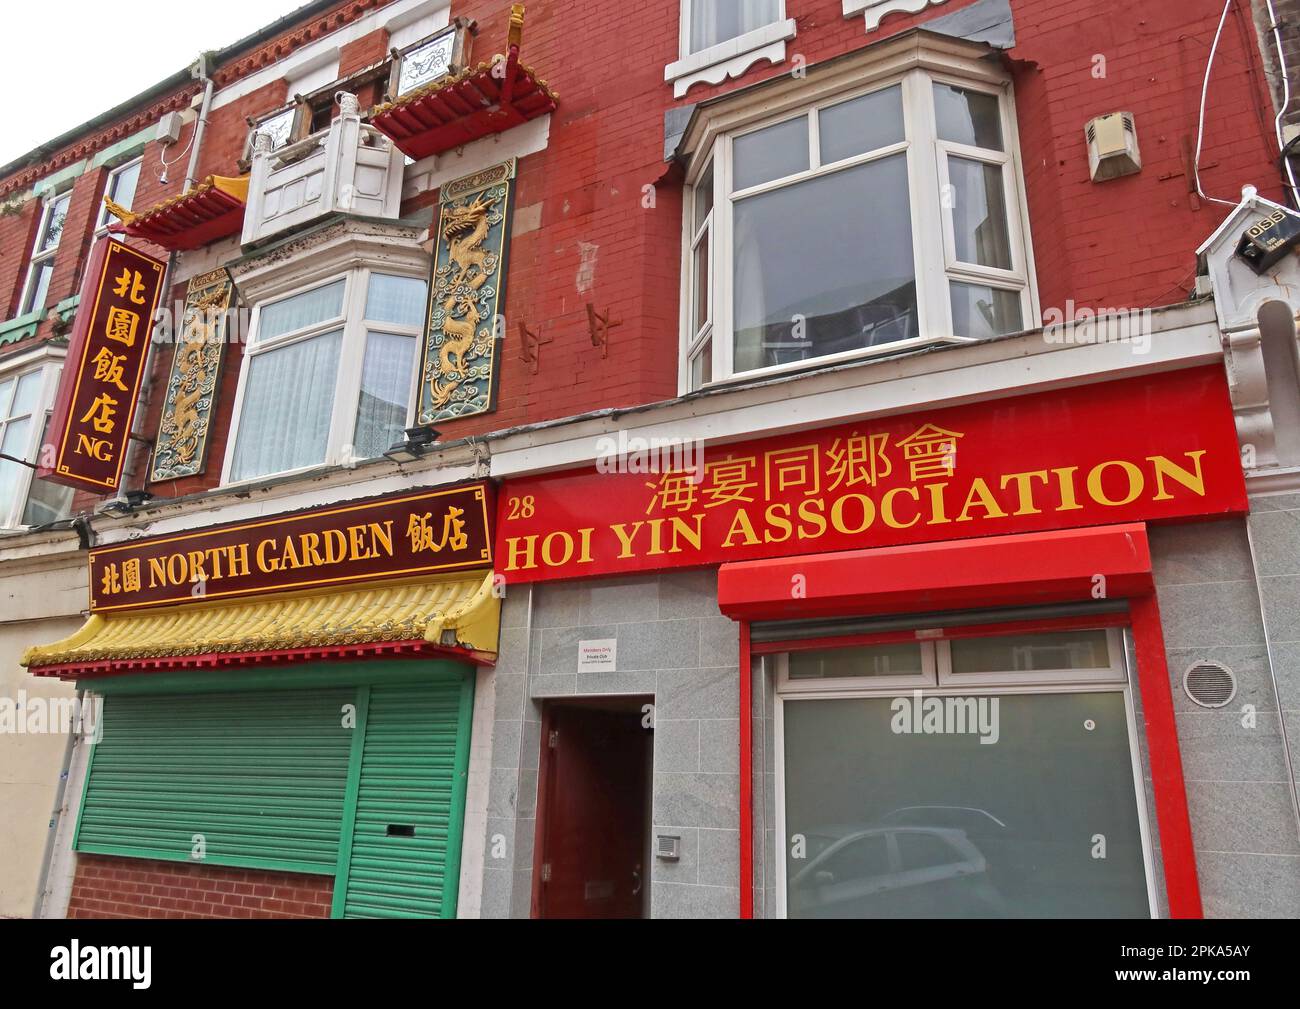 Chinatown Liverpool - Hoi Yin Association & North Garden Chinese Restaurant, 28 Nelson St, Liverpool, Merseyside, England, UK, L1 5DN Stockfoto